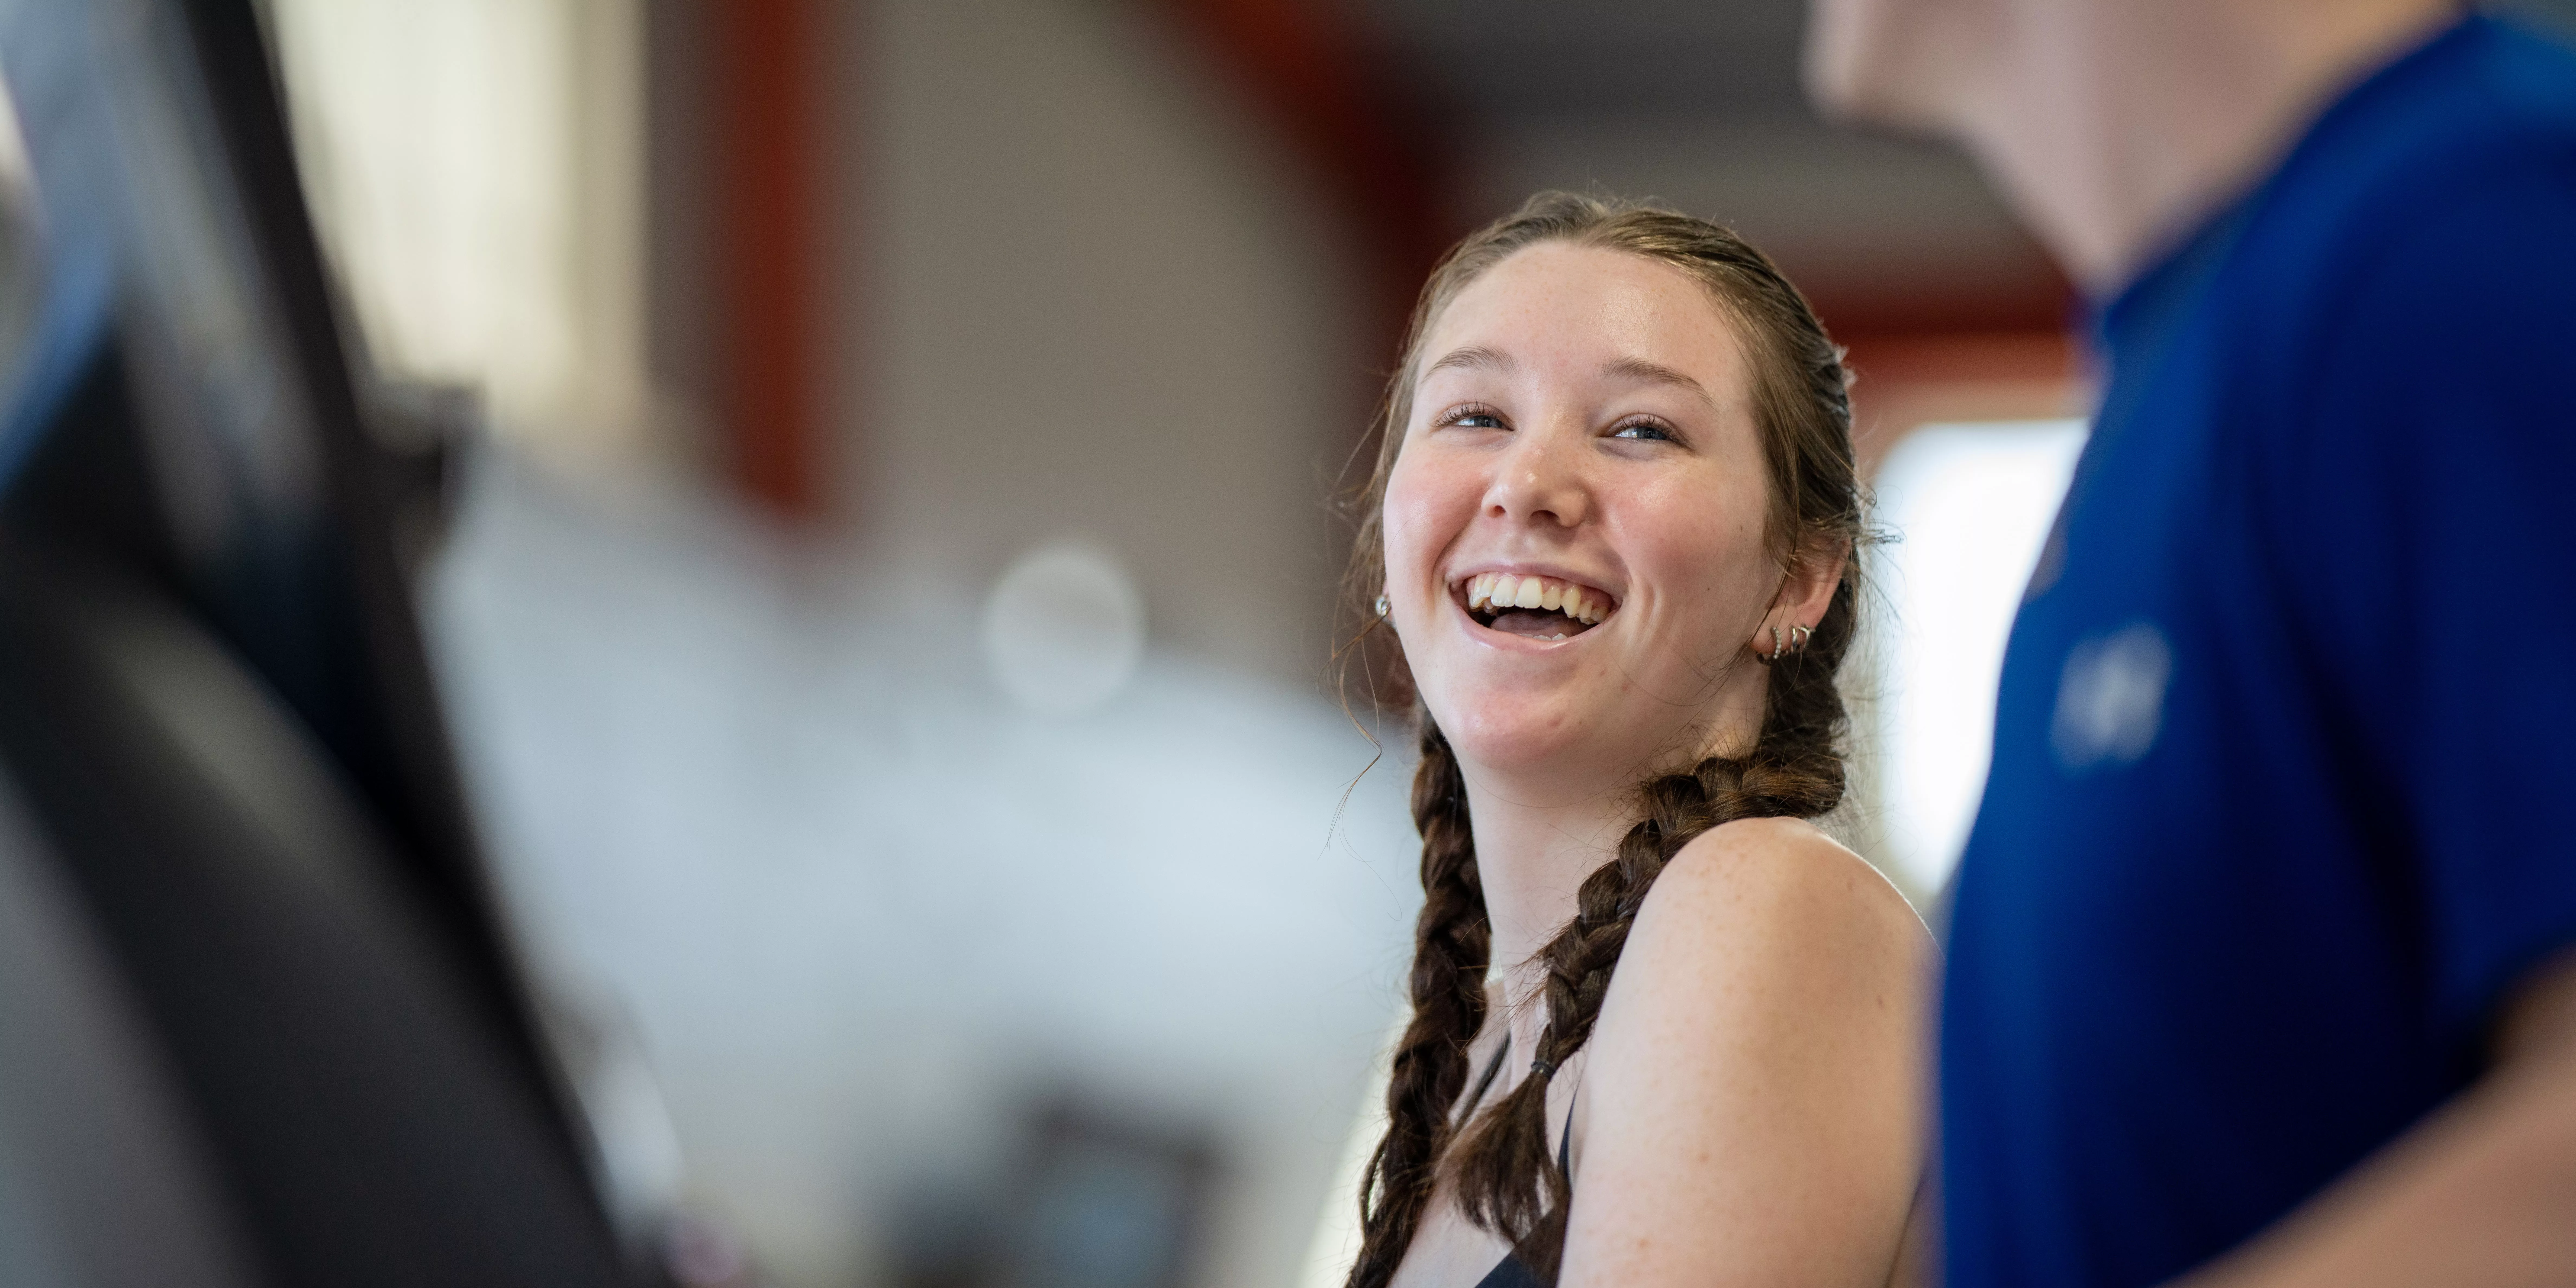 A young woman smiles across a treadmill